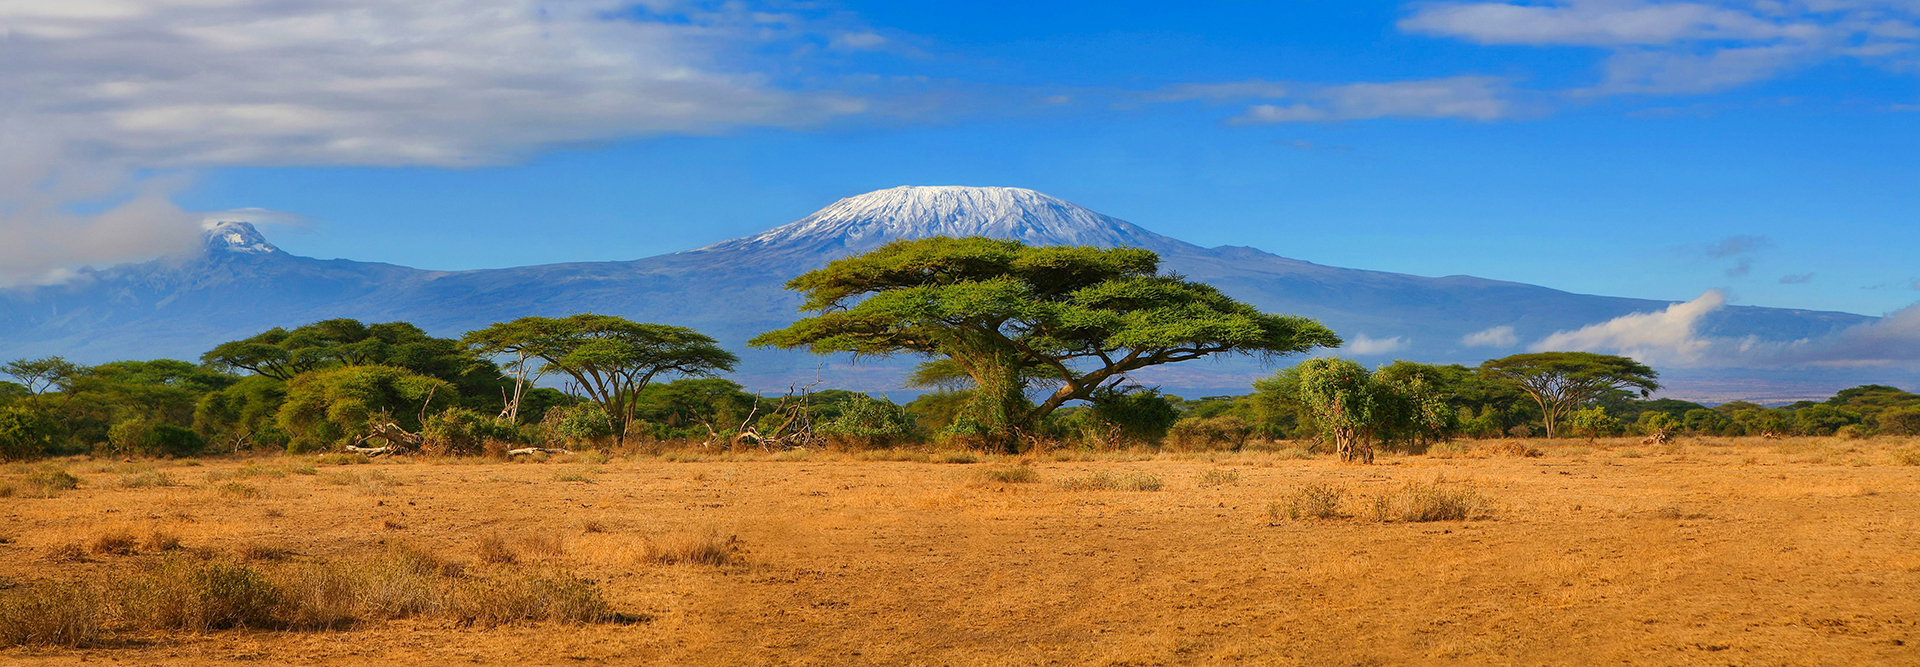 Kilimanjaro Mountain, Tanzania, Africa